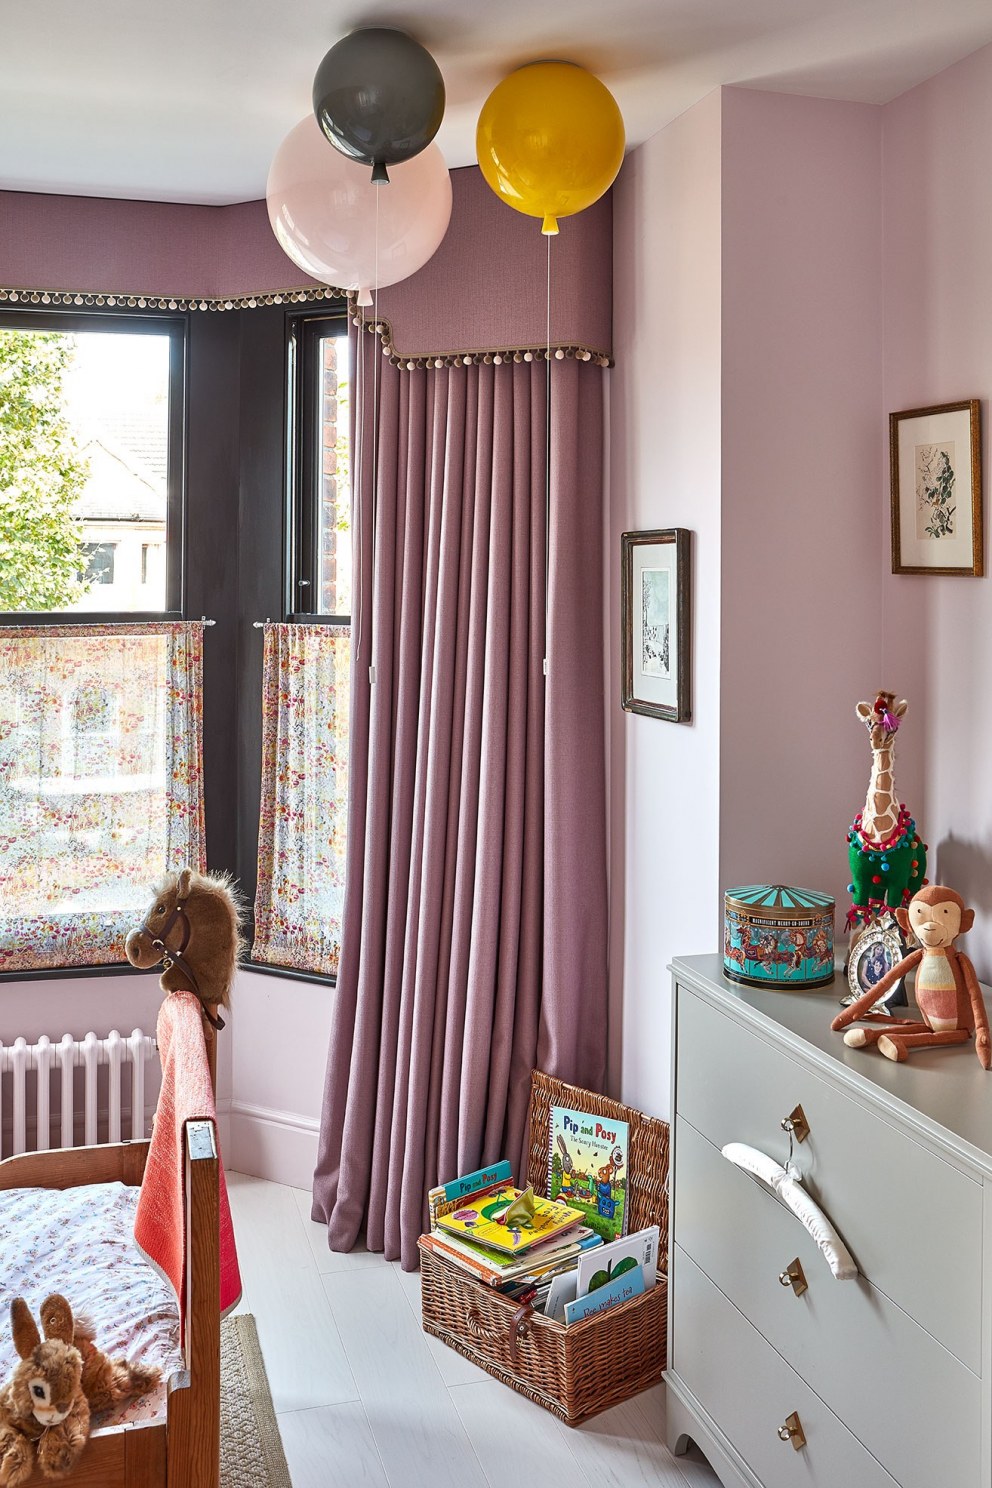 Queens Park | Violets Bedroom 2 | Interior Designers